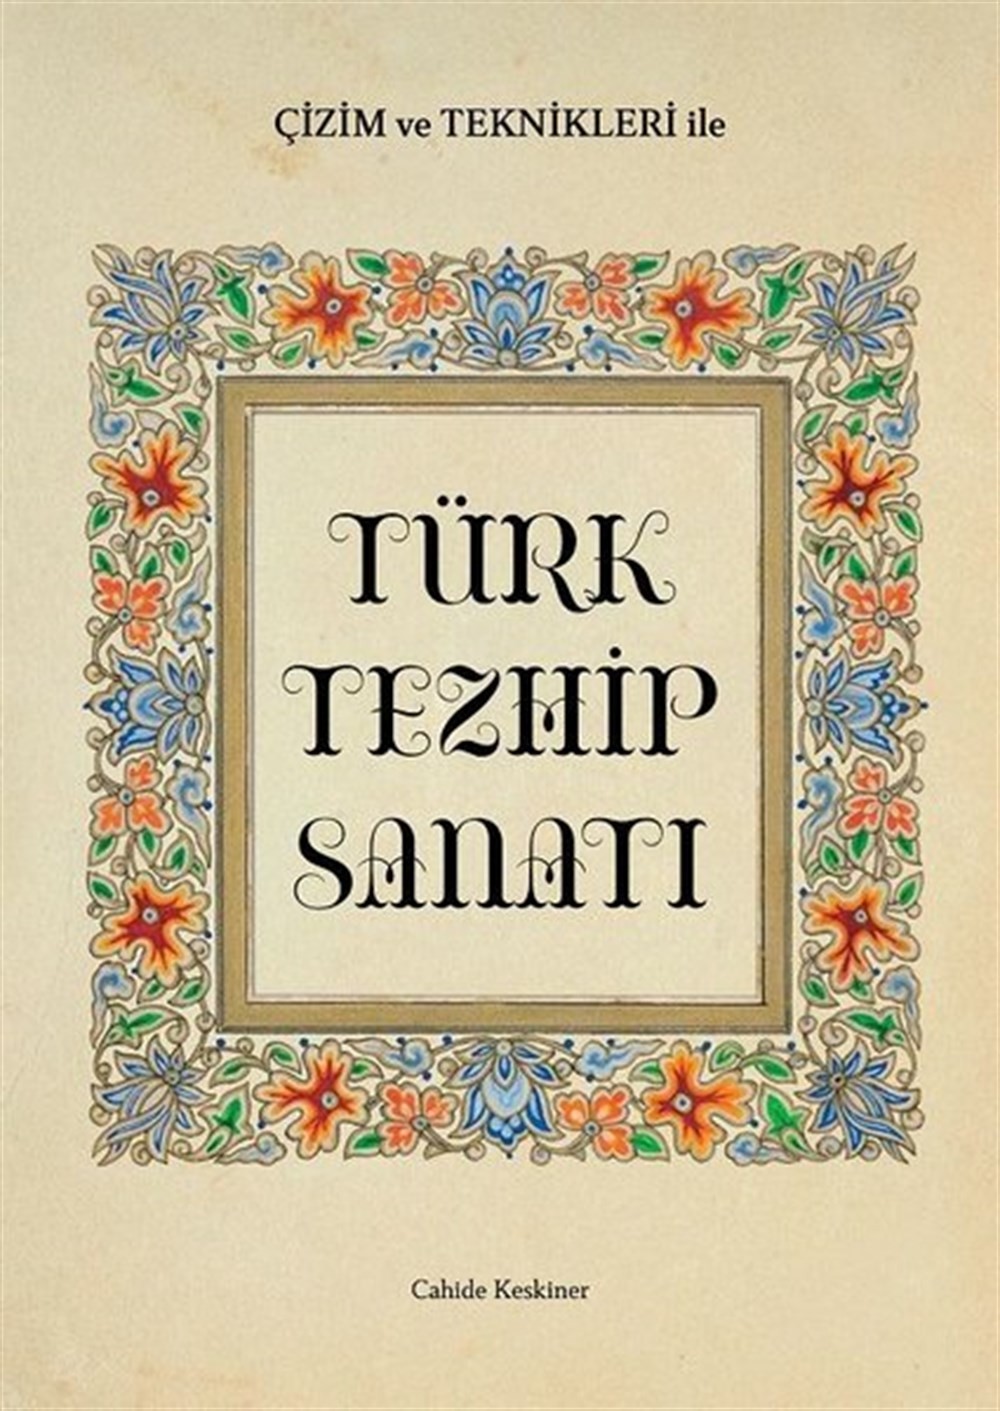 Türk Tezhip Sanatı - Cahide KESKİNER (Illumination Book)